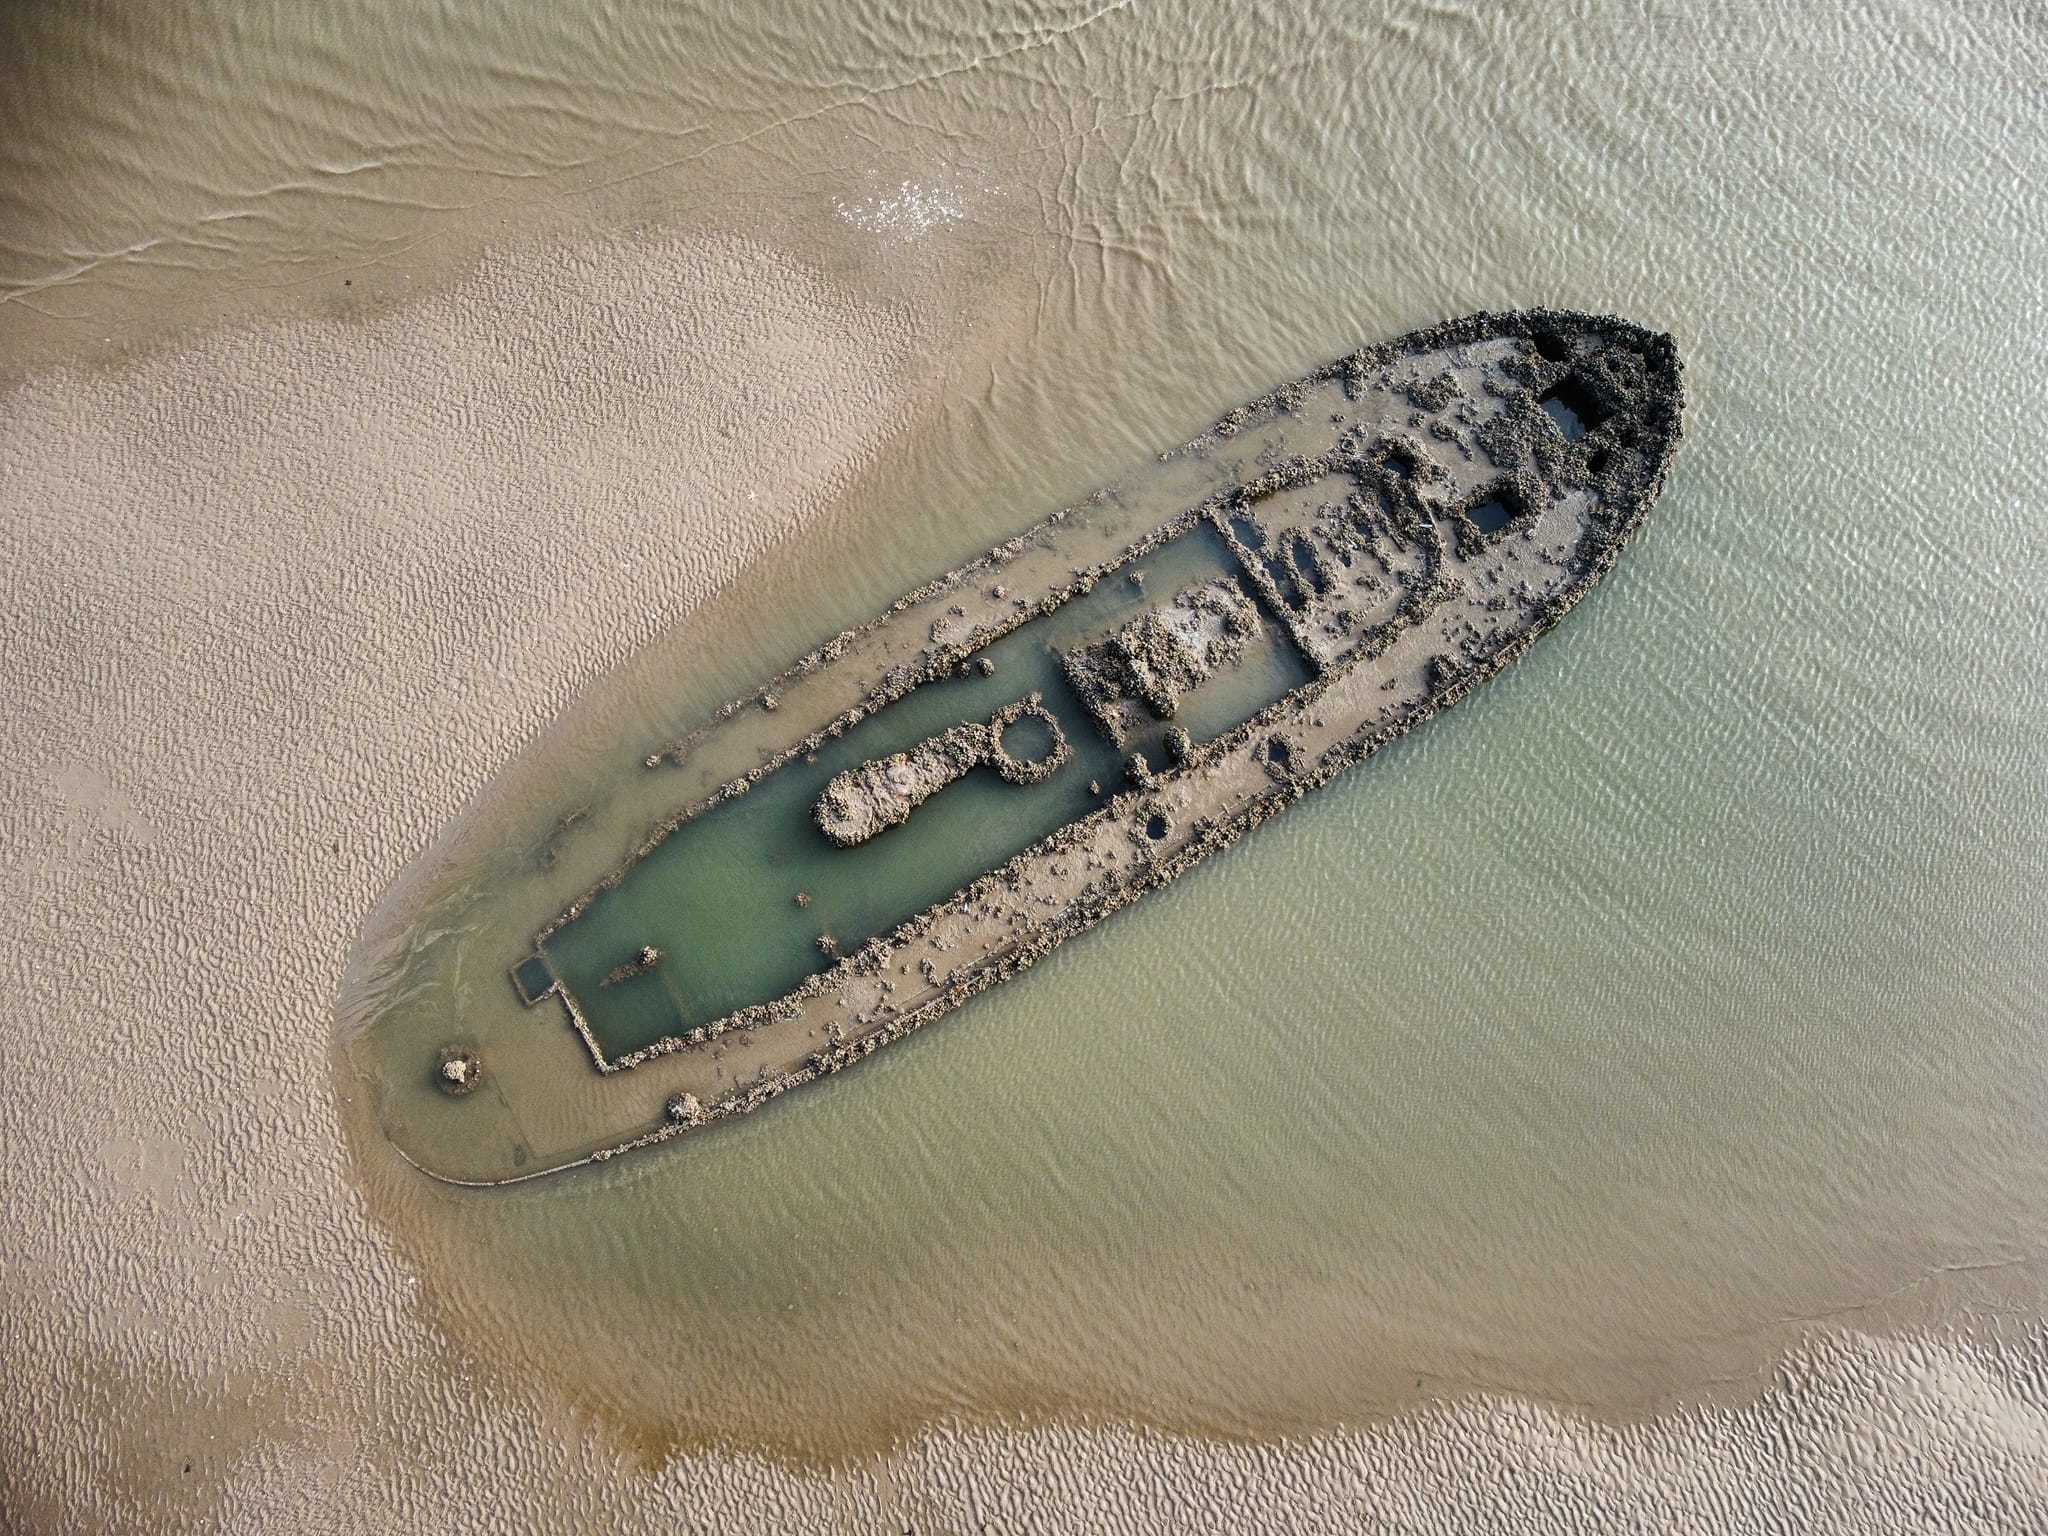 SS Denham on the coast by Paul Anderson